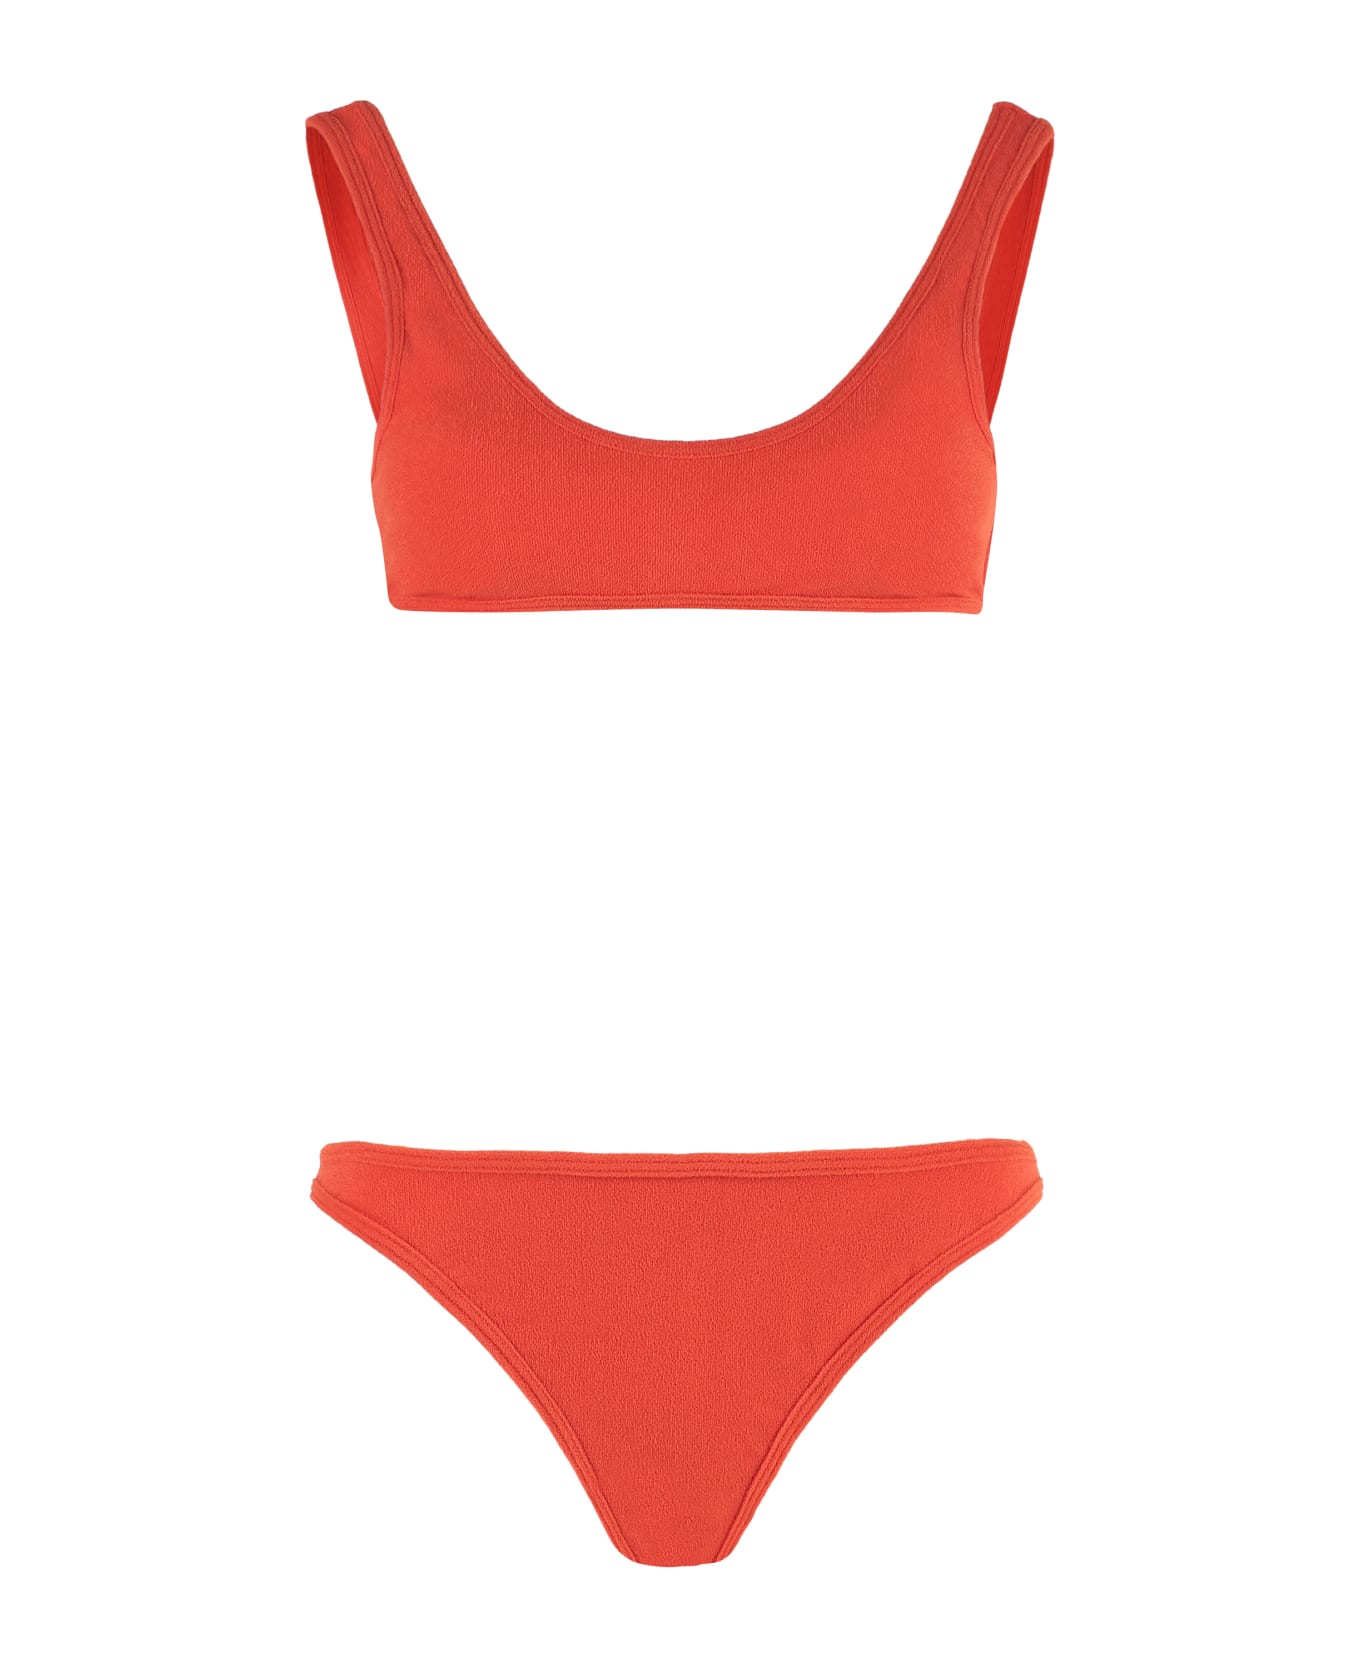 Reina Olga Coolio Set Bikini - Orange